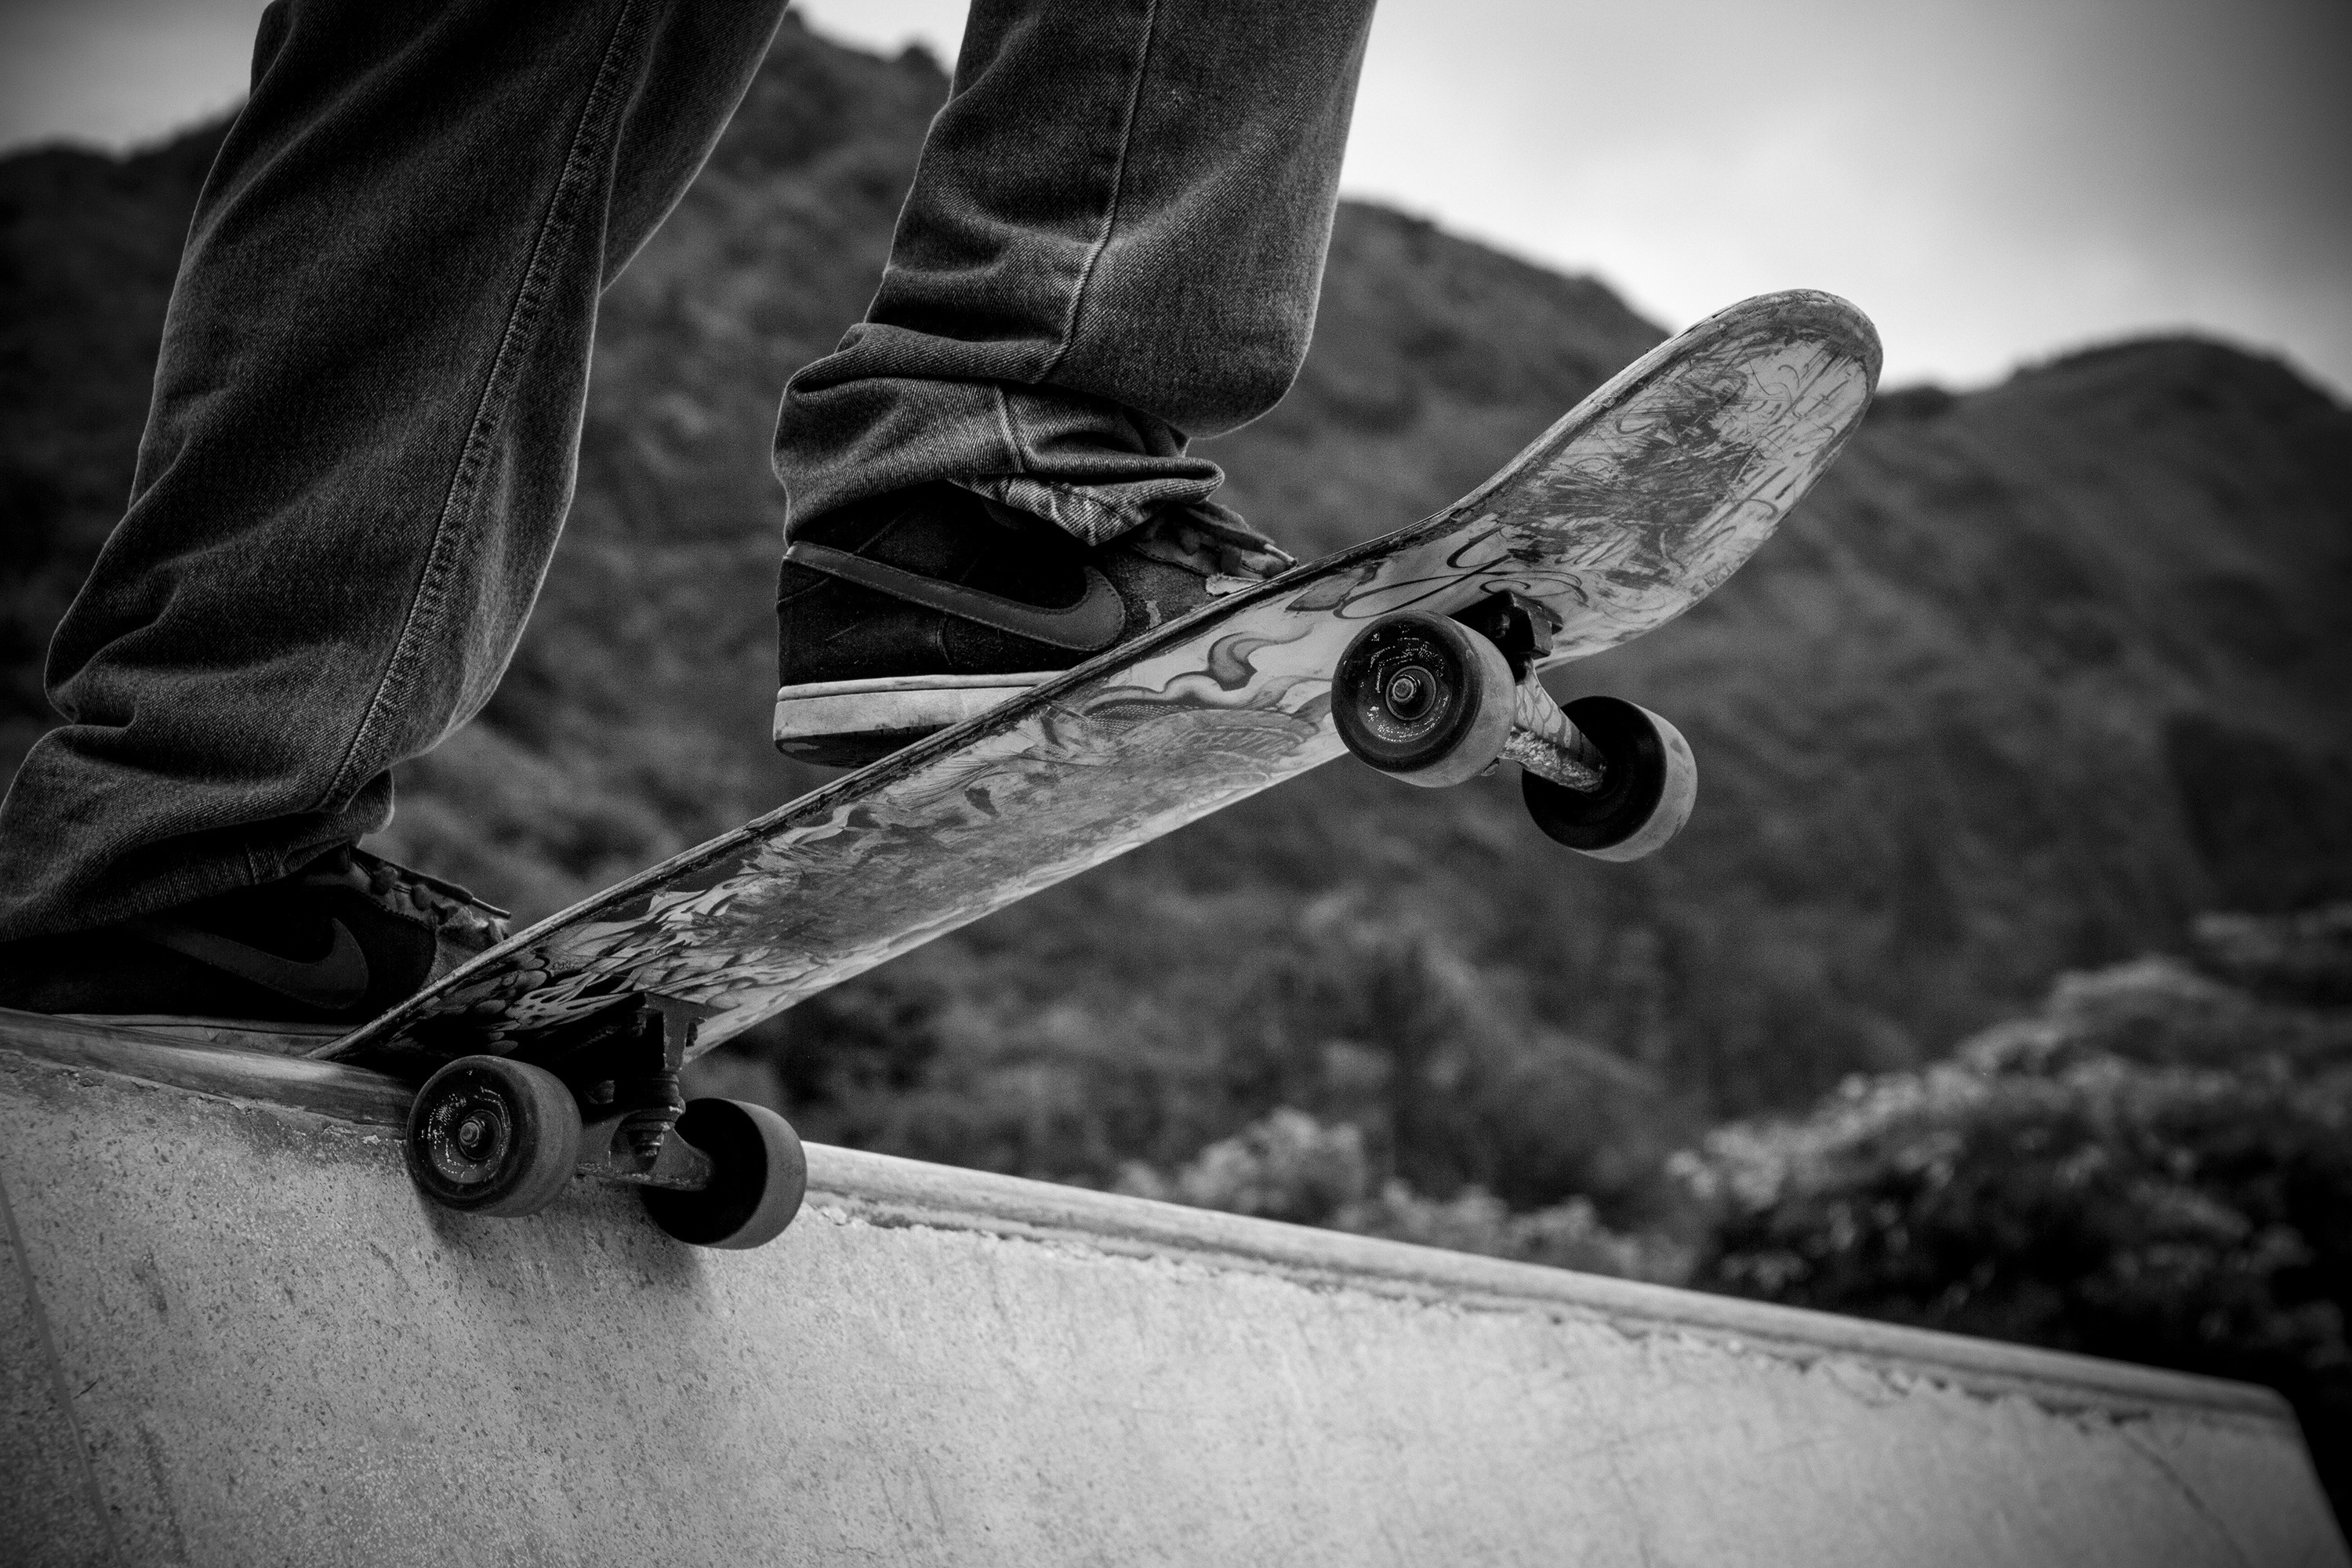 Skateboarding: Monochrome skateboard rider, Outside recreational activity and a street sports discipline. 3000x2000 HD Wallpaper.